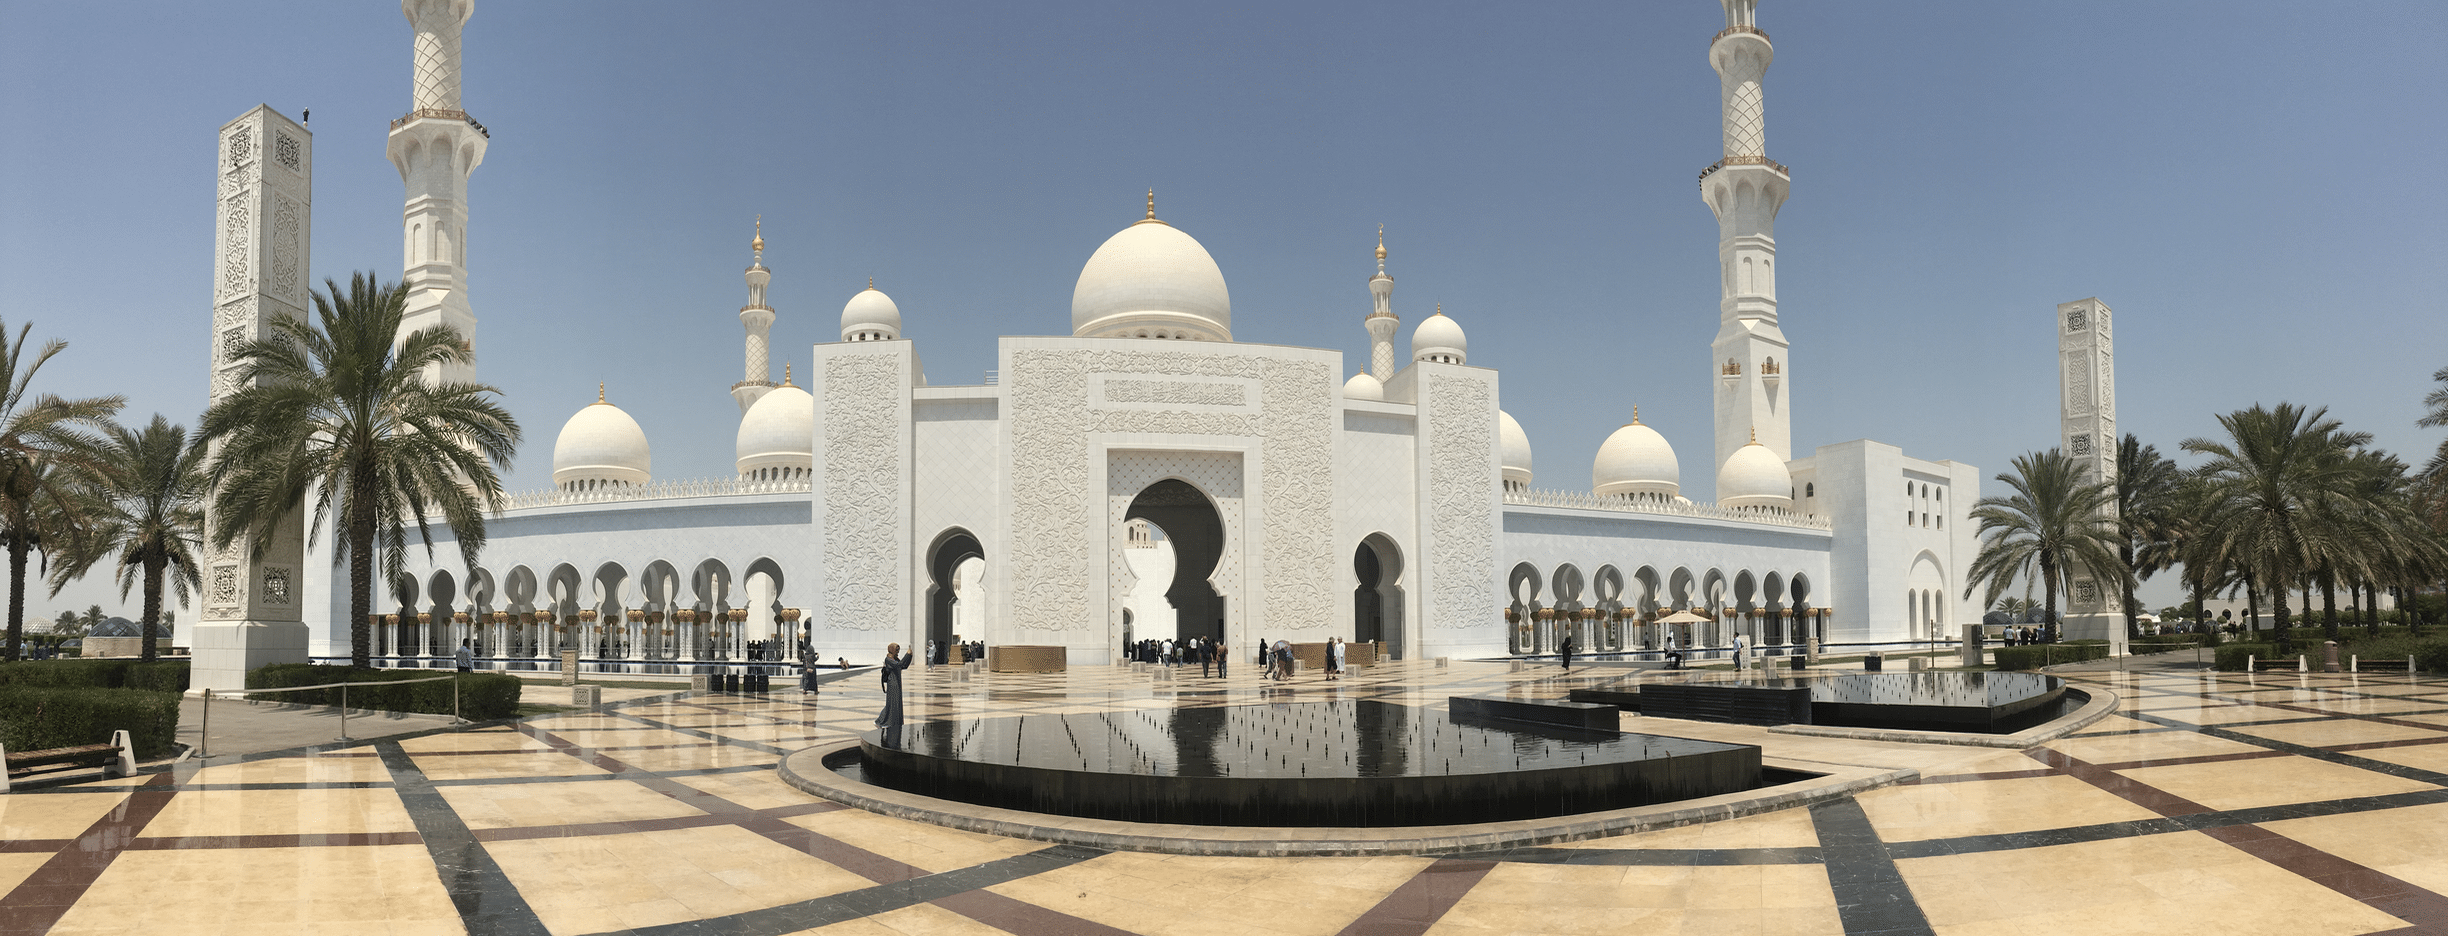 une journee a abu dhabi : visiter la grande mosquee